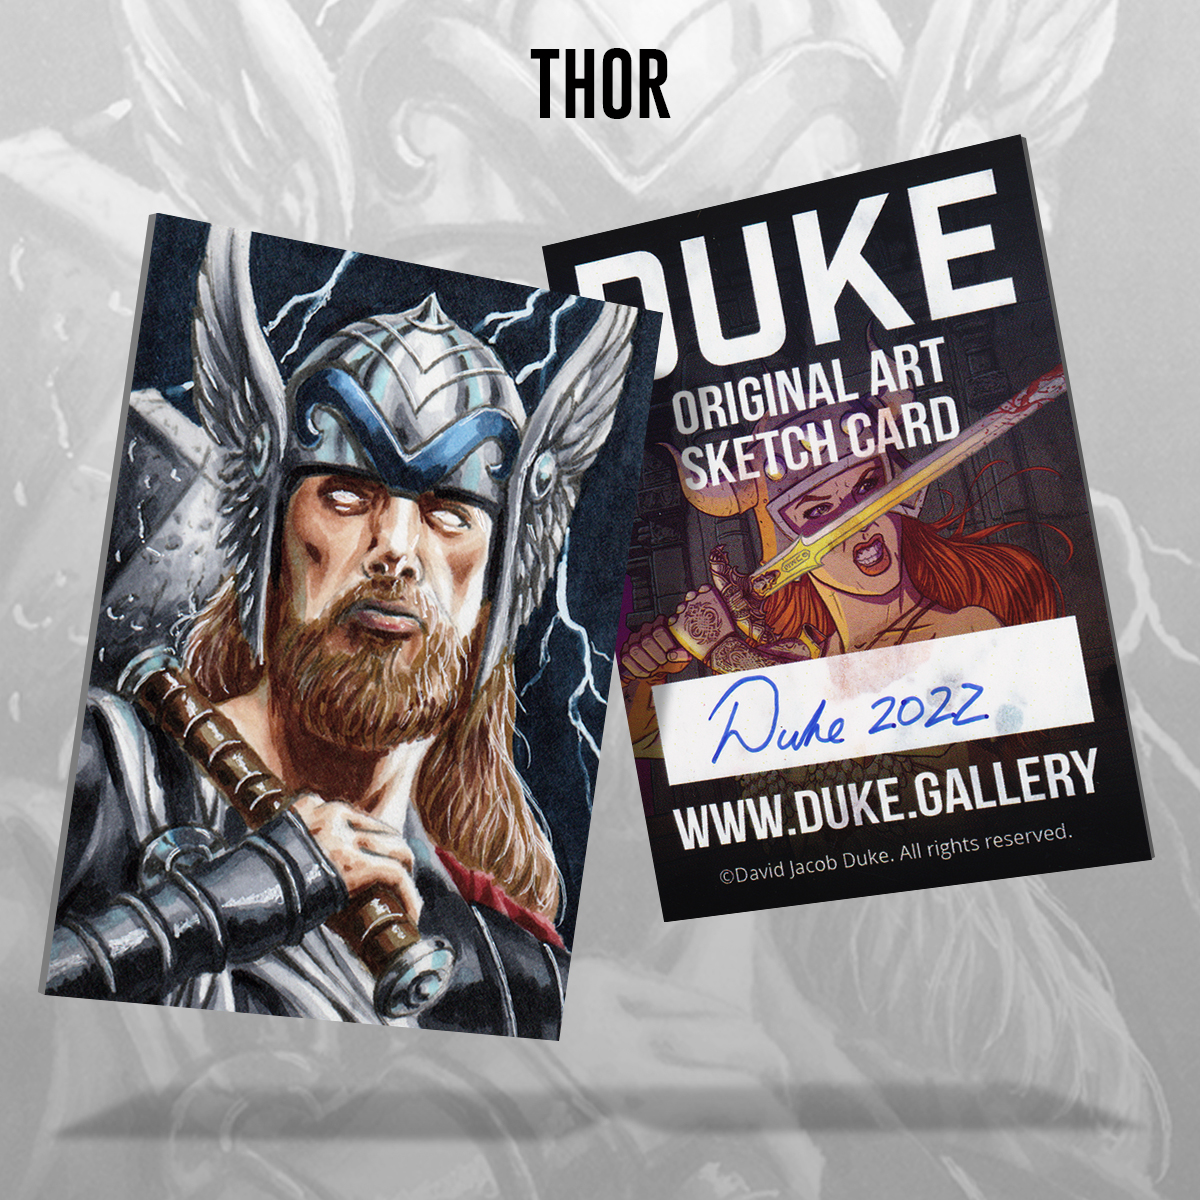 Thor Sketch Card by Duke